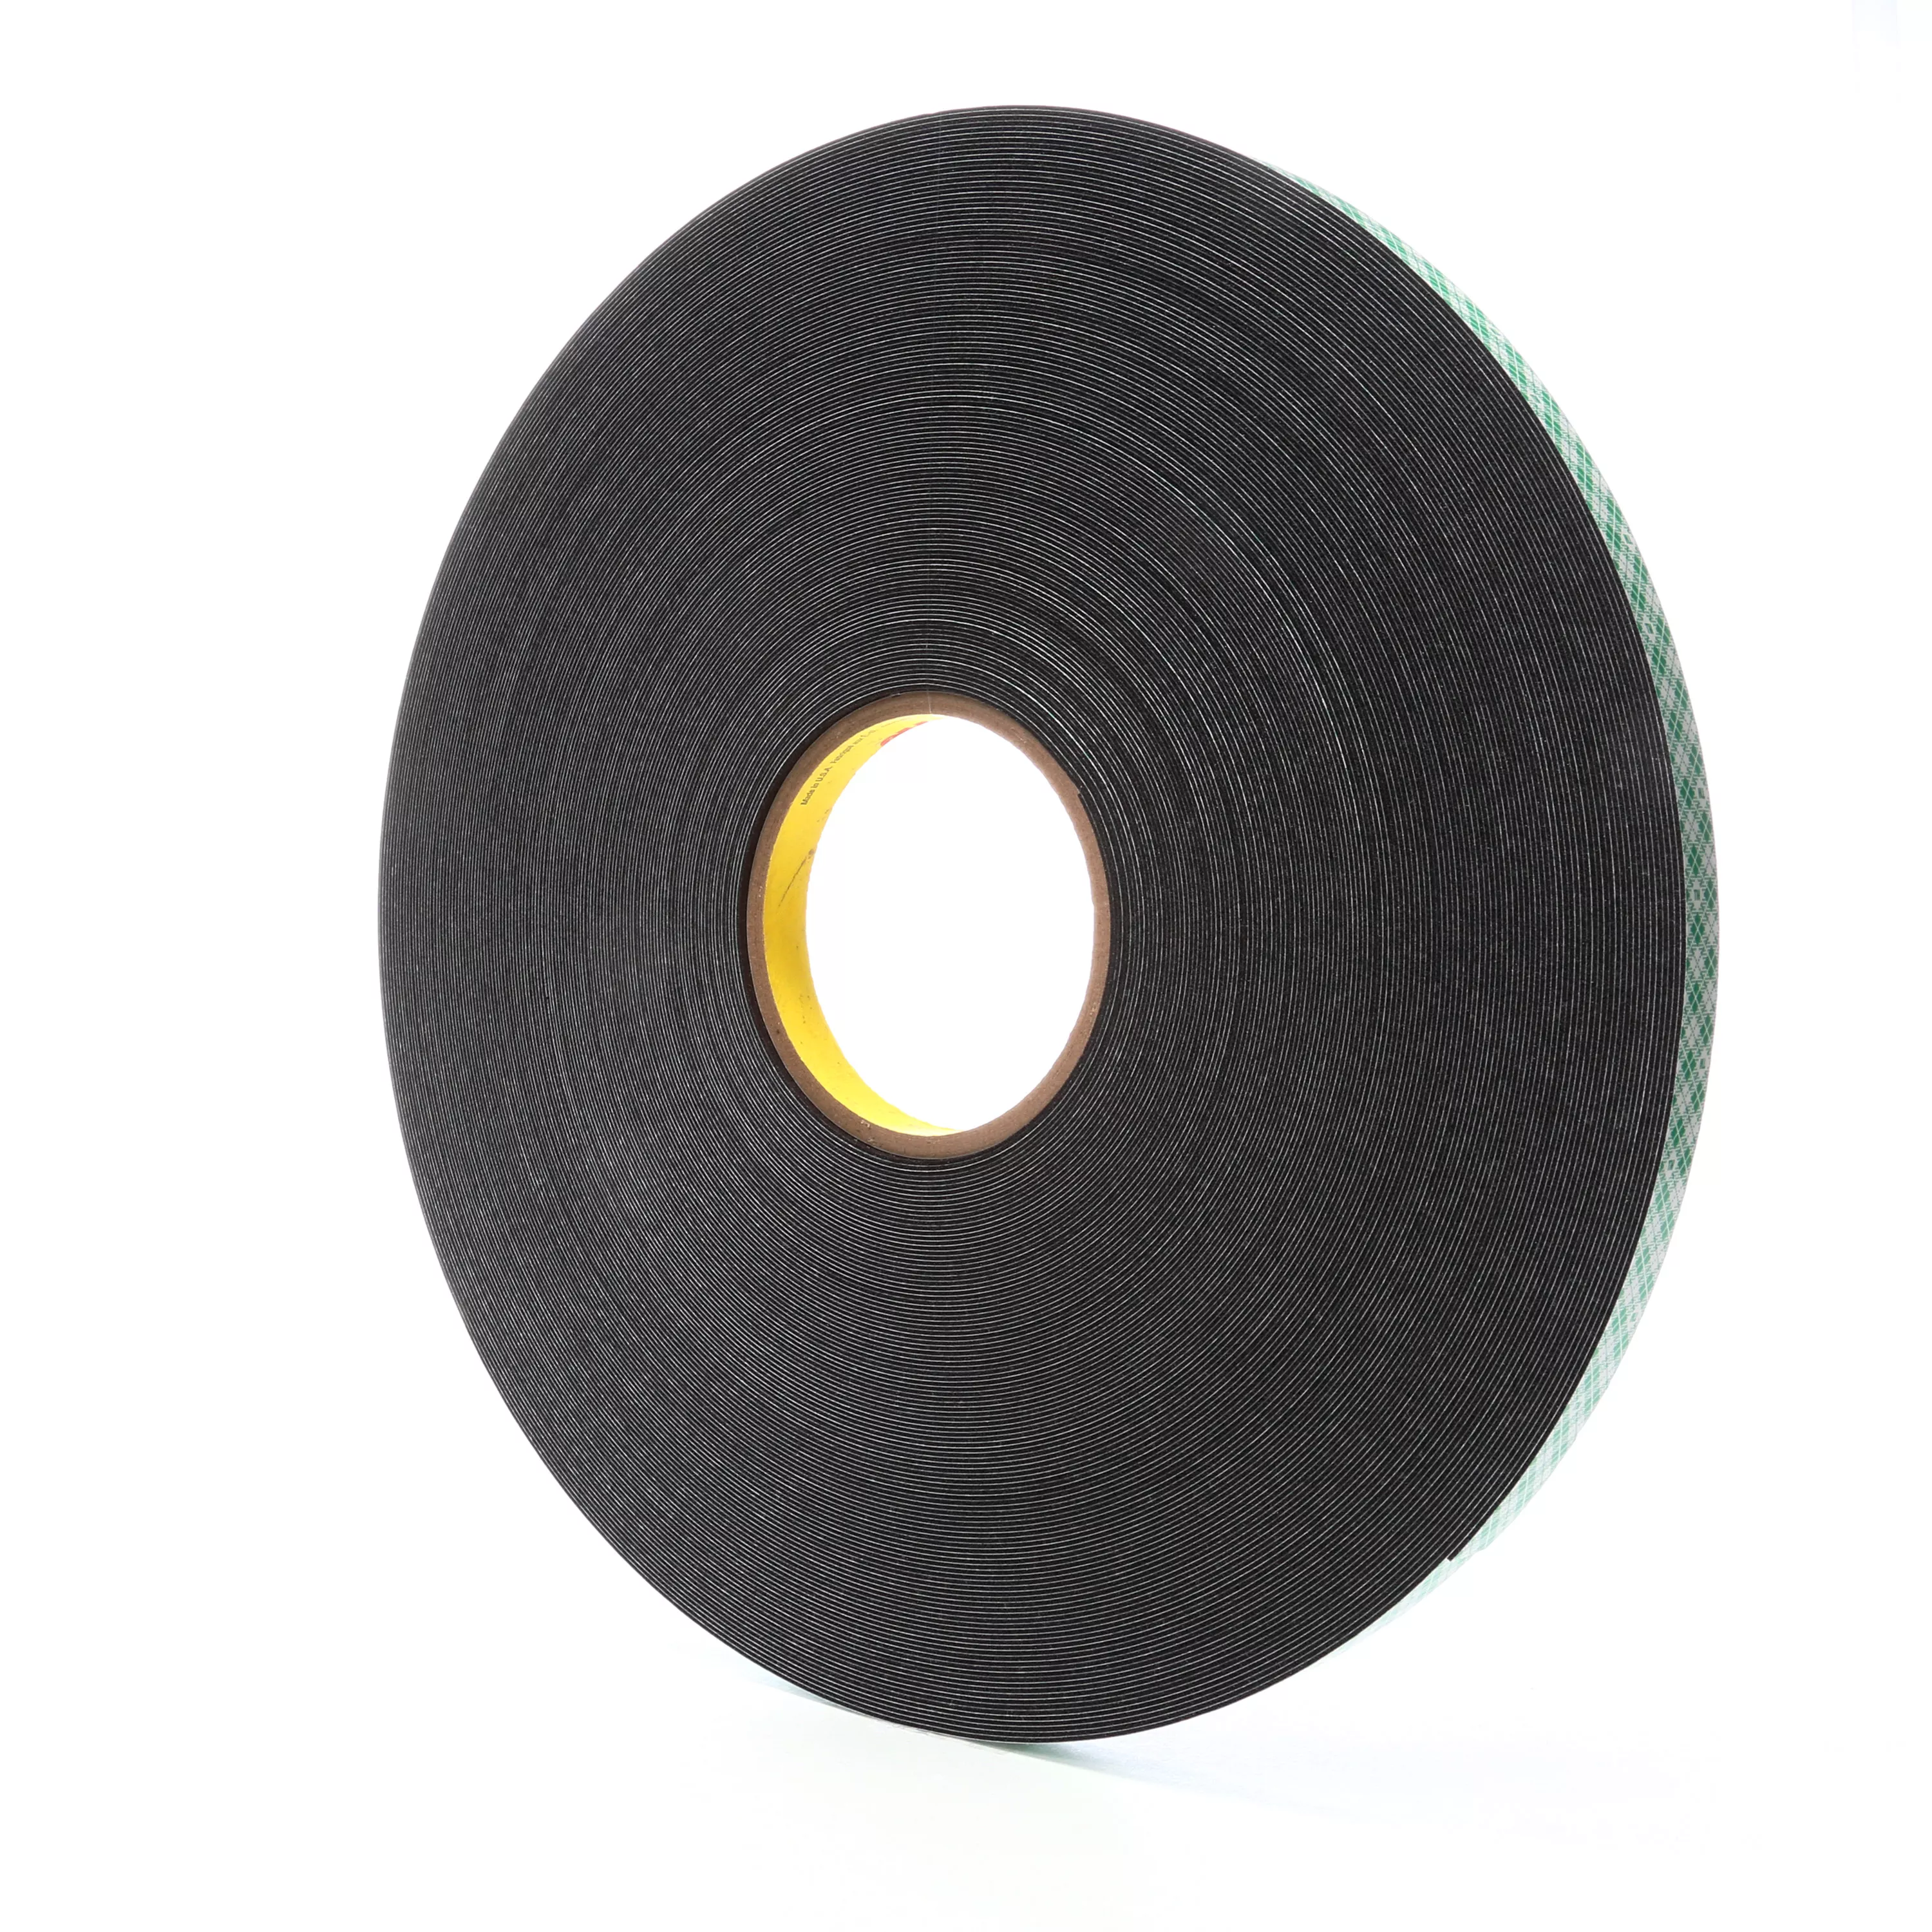 3M™ Double Coated Urethane Foam Tape 4052, Black, 1/2 in x 72 yd, 31
mil, 18 Roll/Case